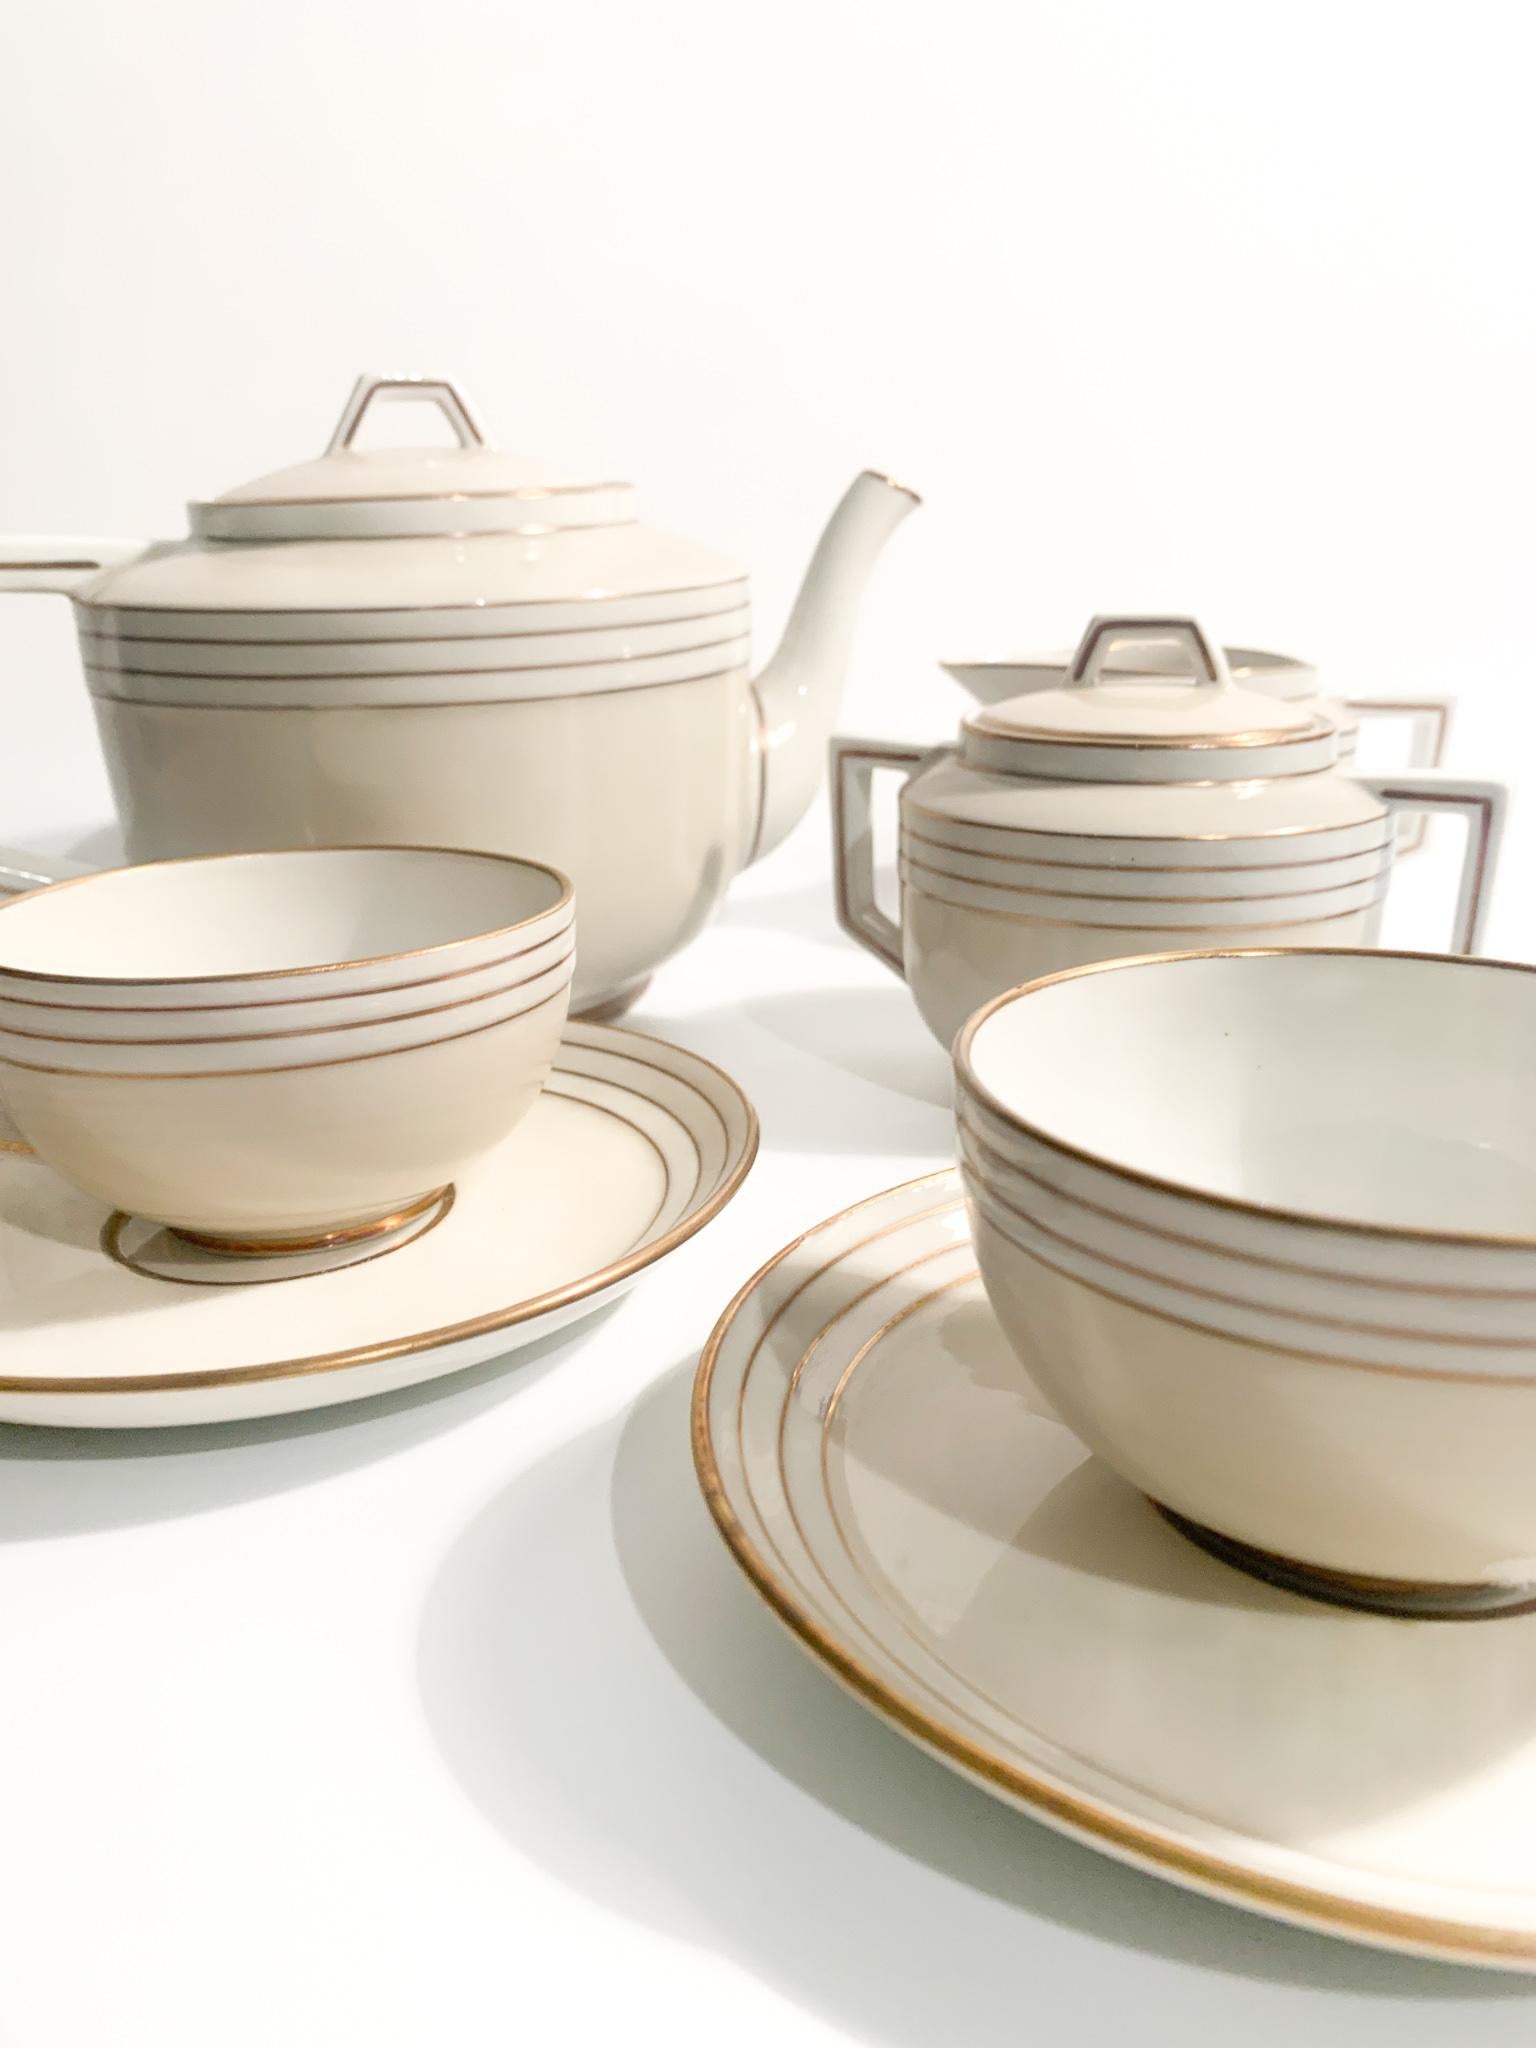 Art Deco Twelve Richard Ginori Decò Tea Set in Porcelain from the 1940s